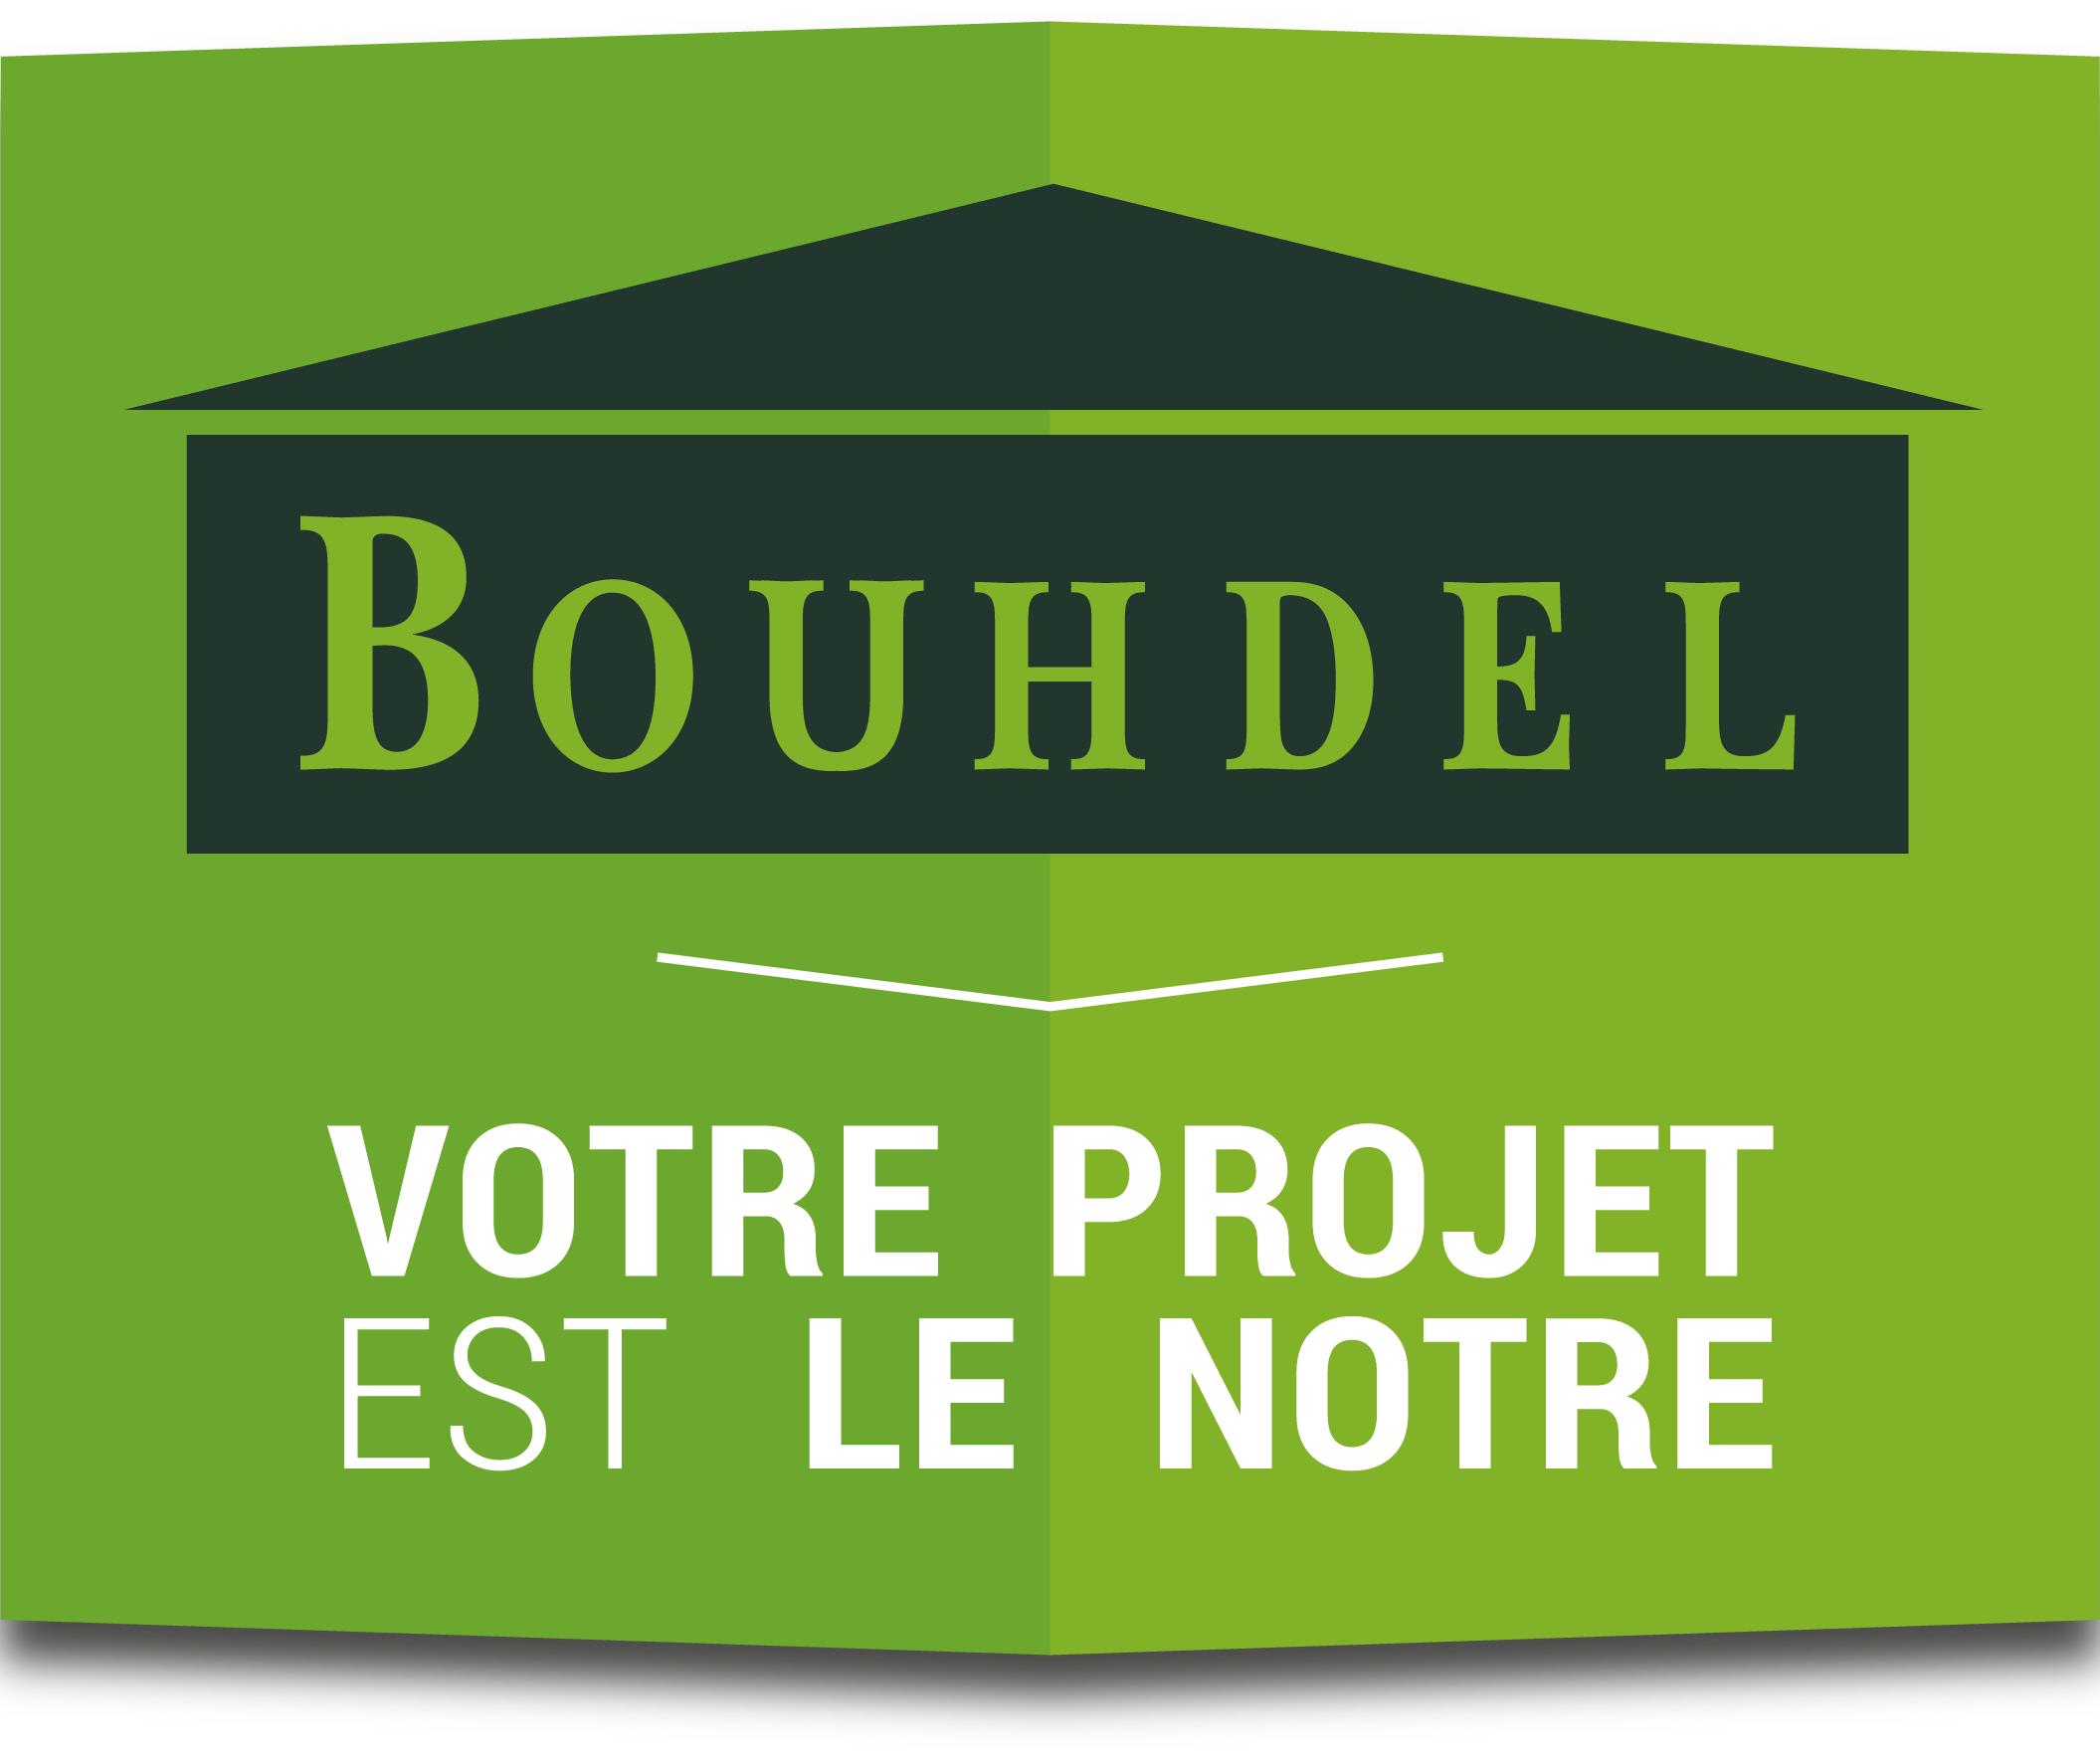 logo groupe bouhdel